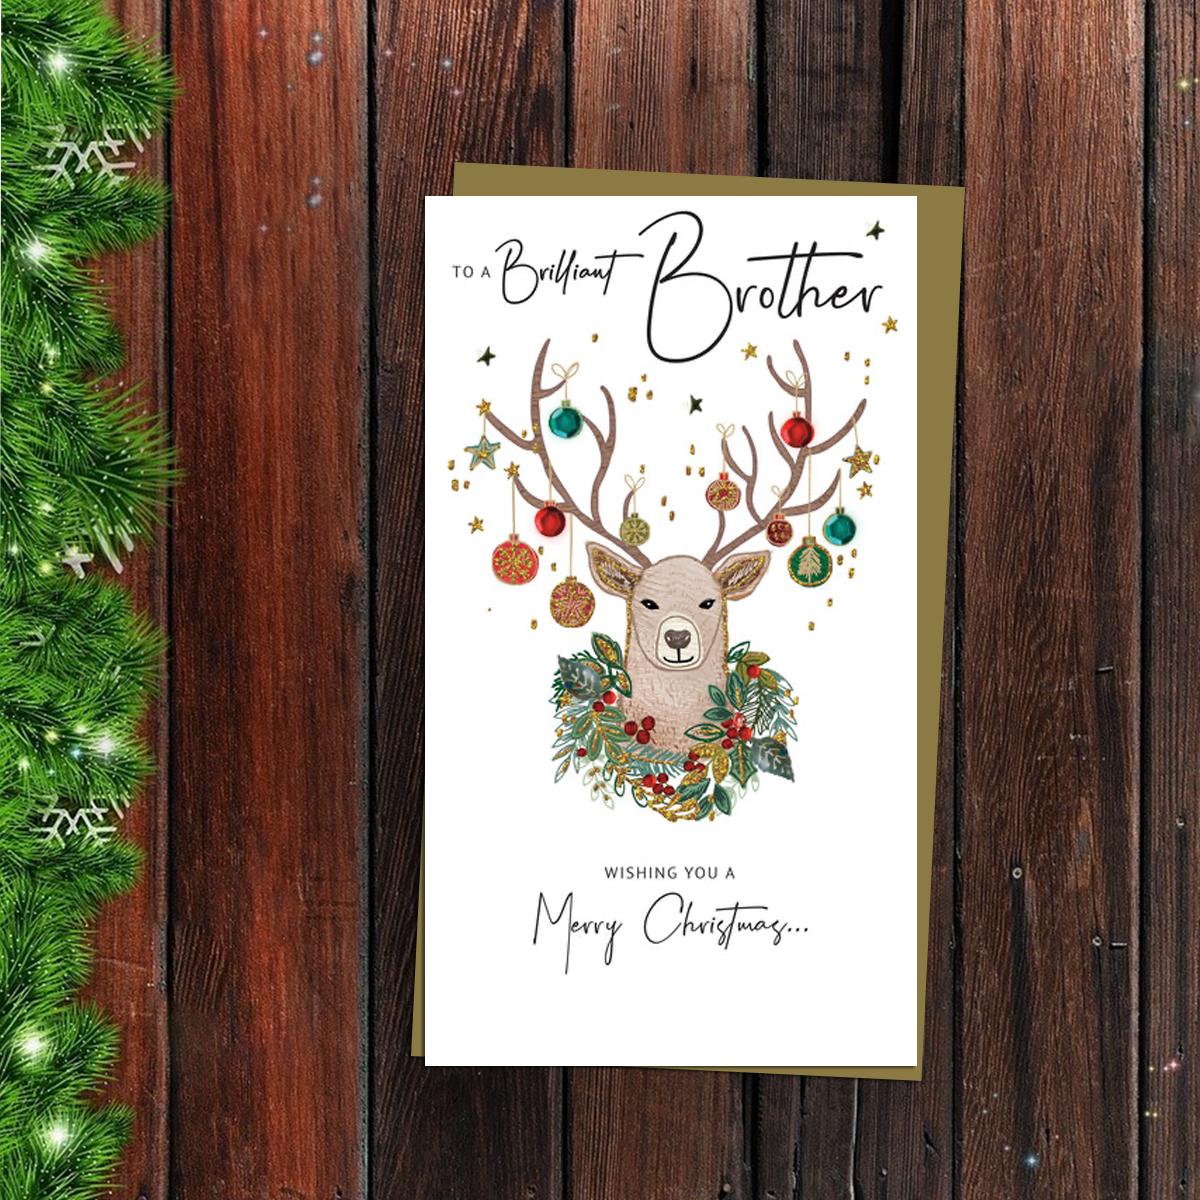 Brilliant Brother Christmas Card Alongside Its Gold Envelope